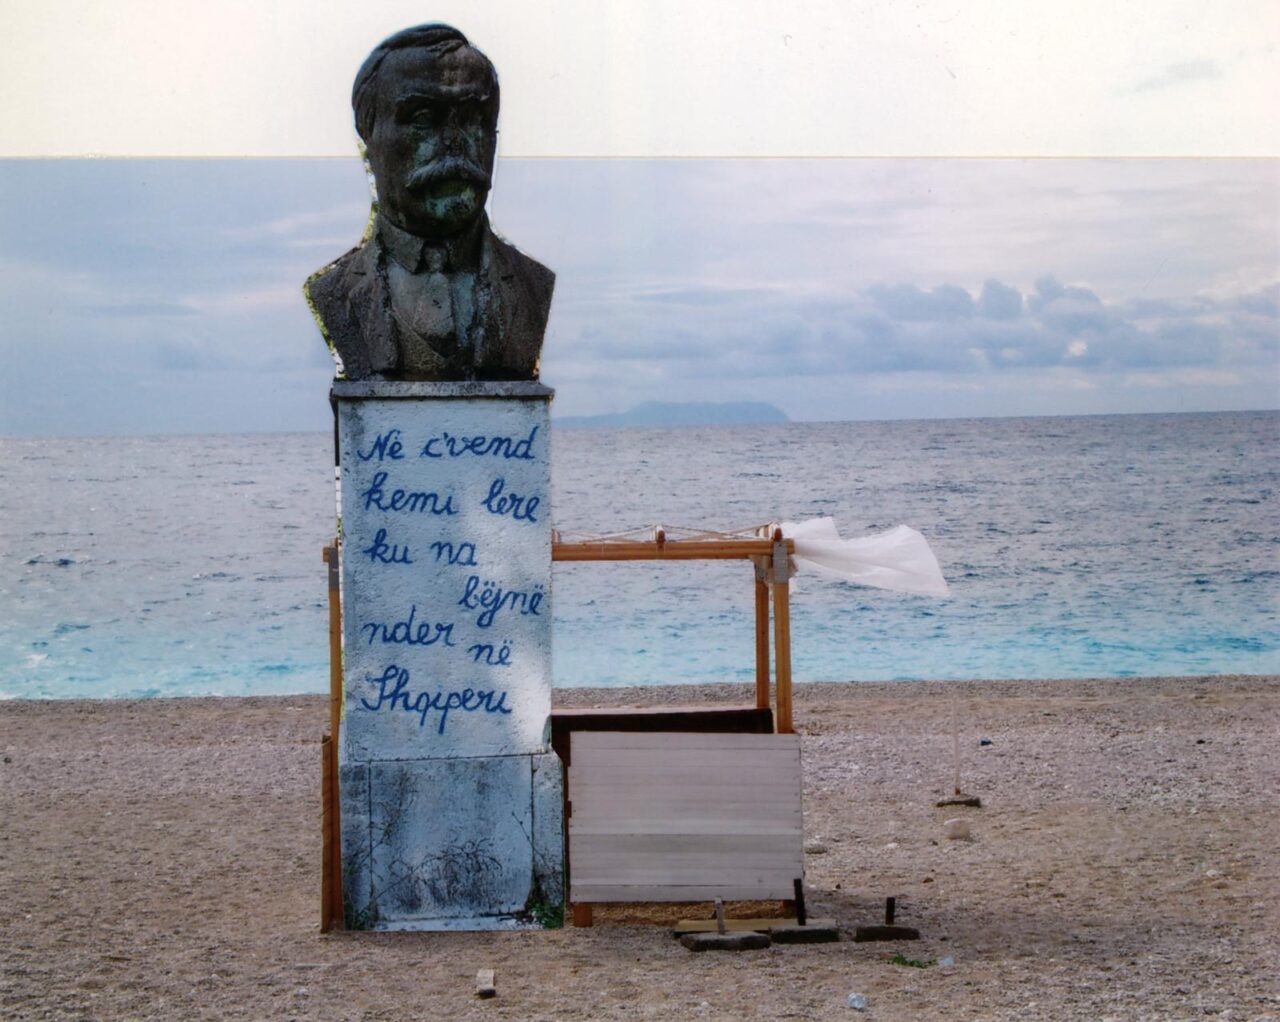 Denkmal vor Meer am Strand